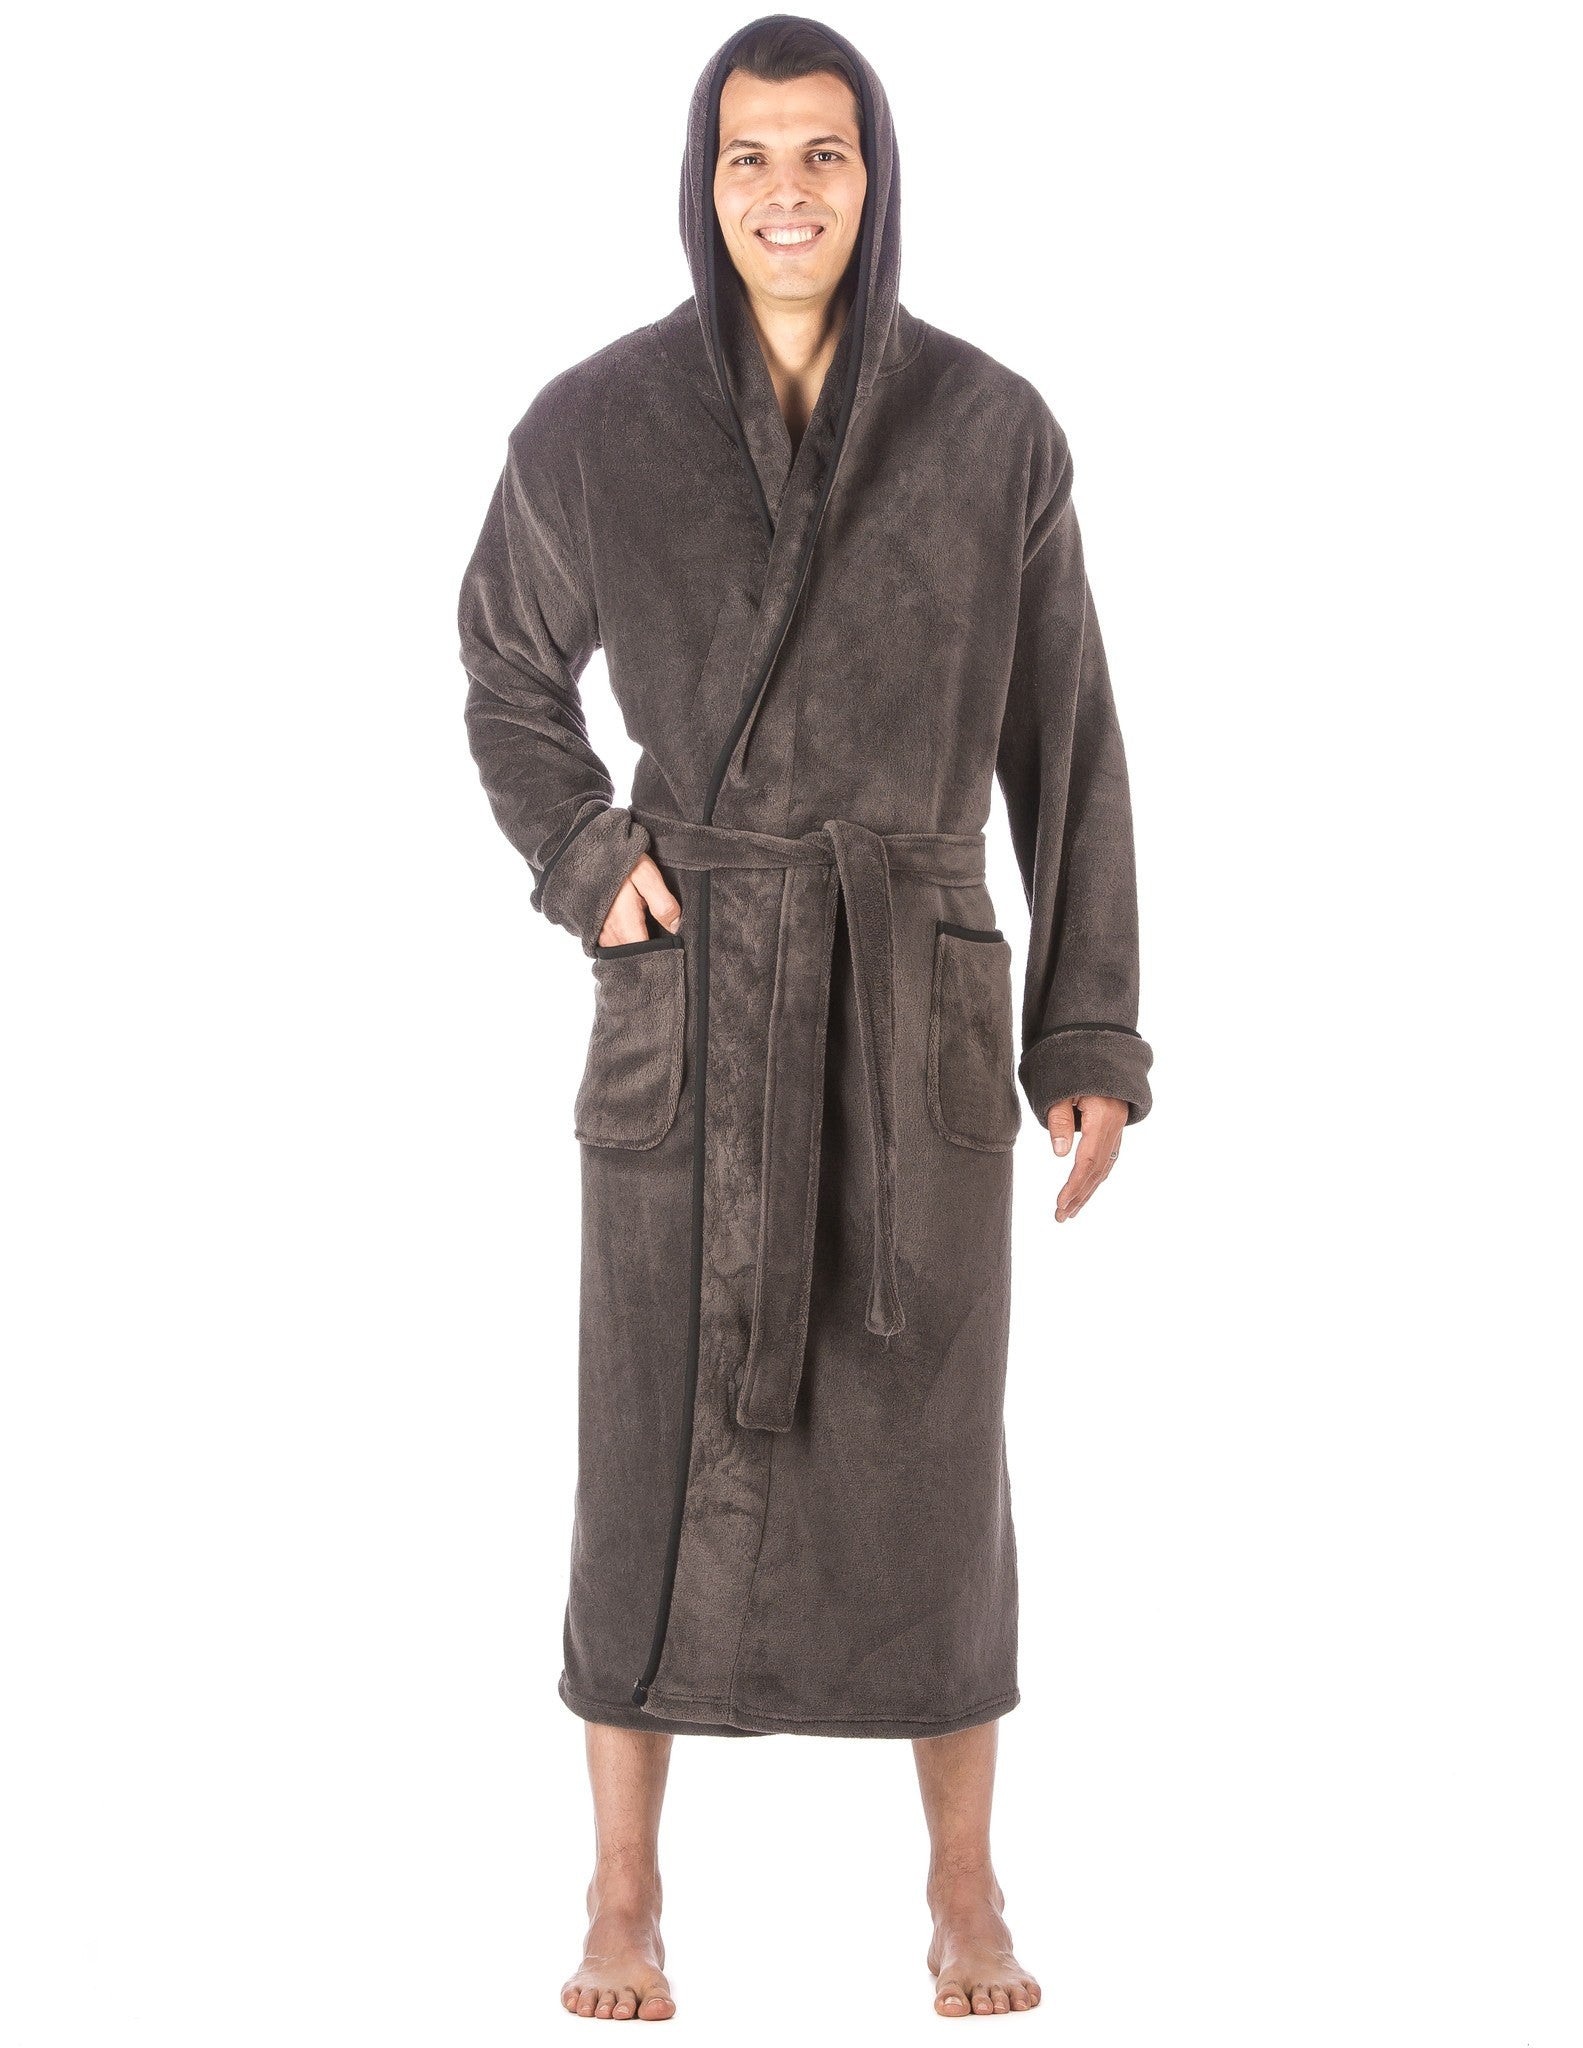 Noble Mount Men's Coral Fleece Hooded Spa/Bath Robe